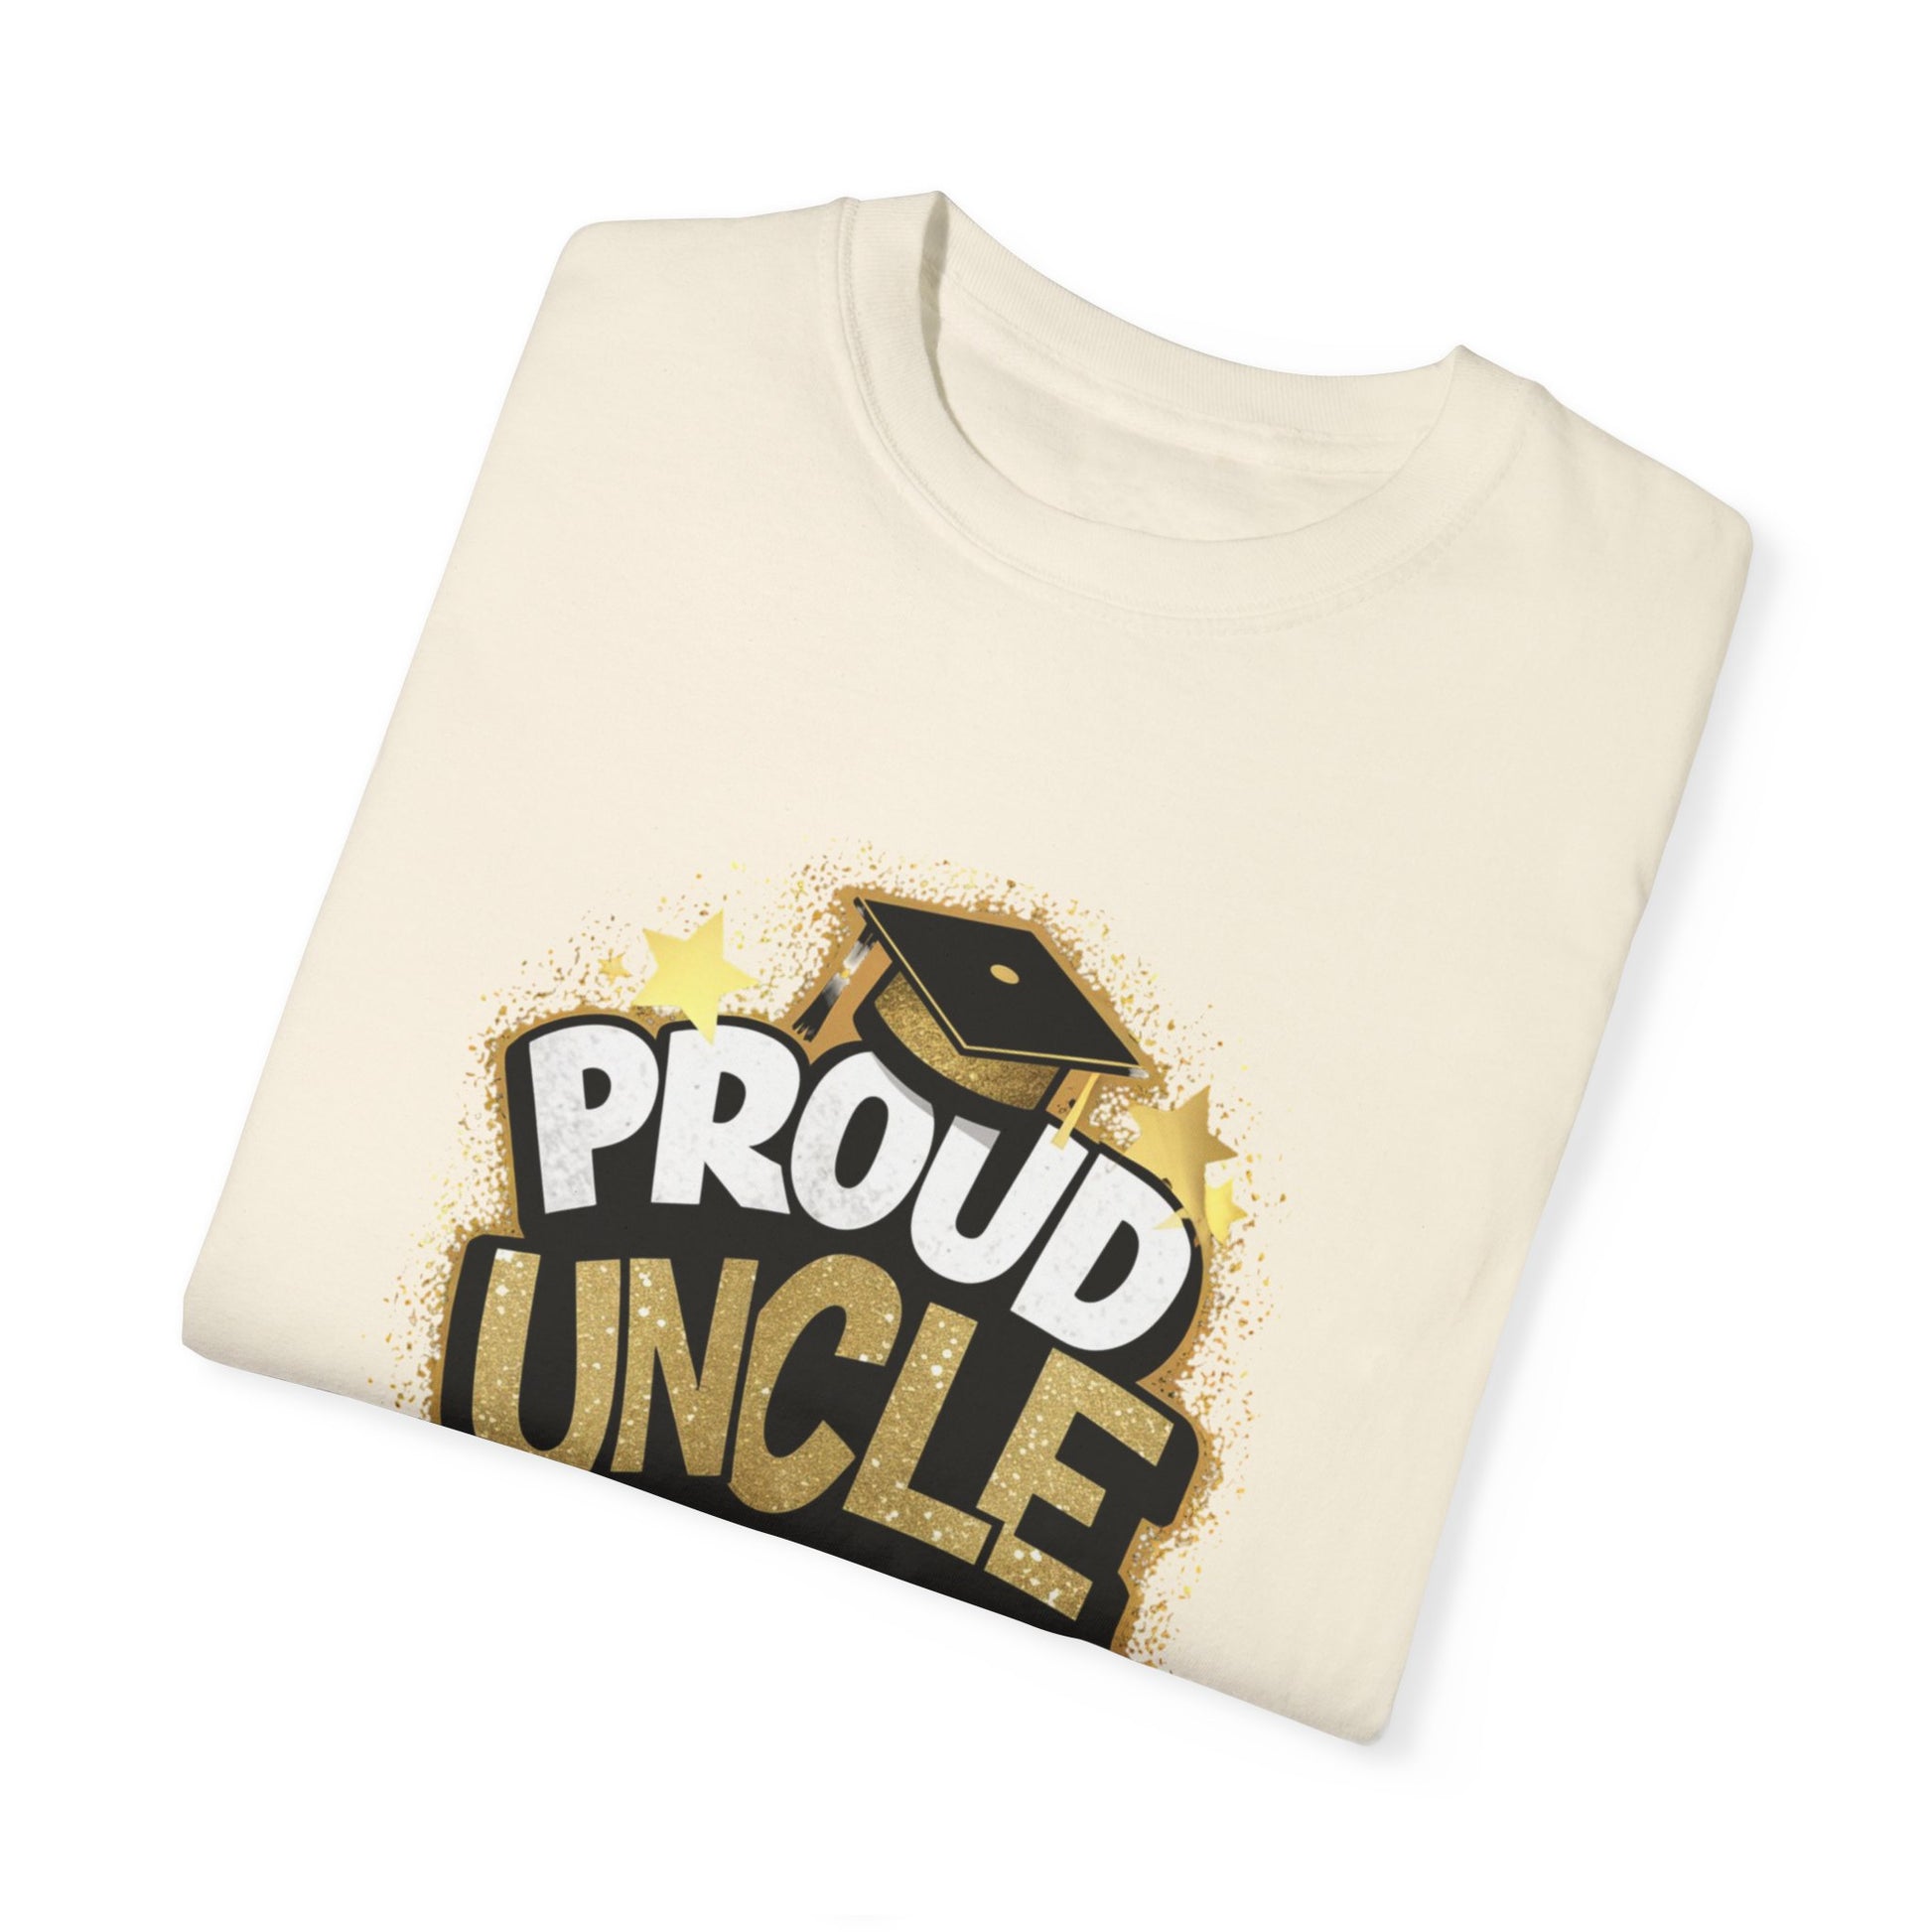 Proud Uncle of a 2024 Graduate Unisex Garment-dyed T-shirt Cotton Funny Humorous Graphic Soft Premium Unisex Men Women Ivory T-shirt Birthday Gift-44